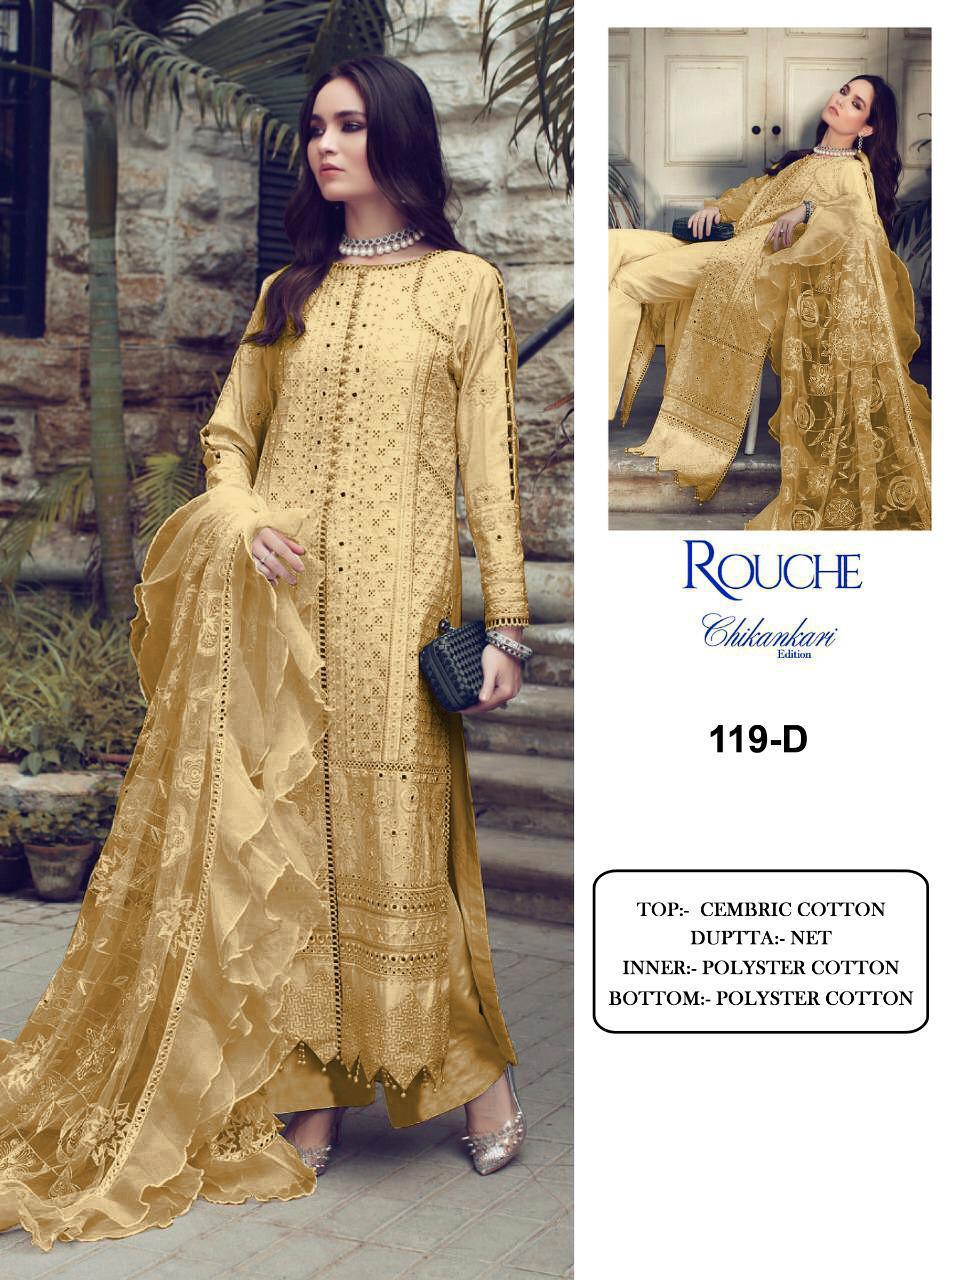 Pakistani Suits Rouche Chikankari Edition KF 119-D